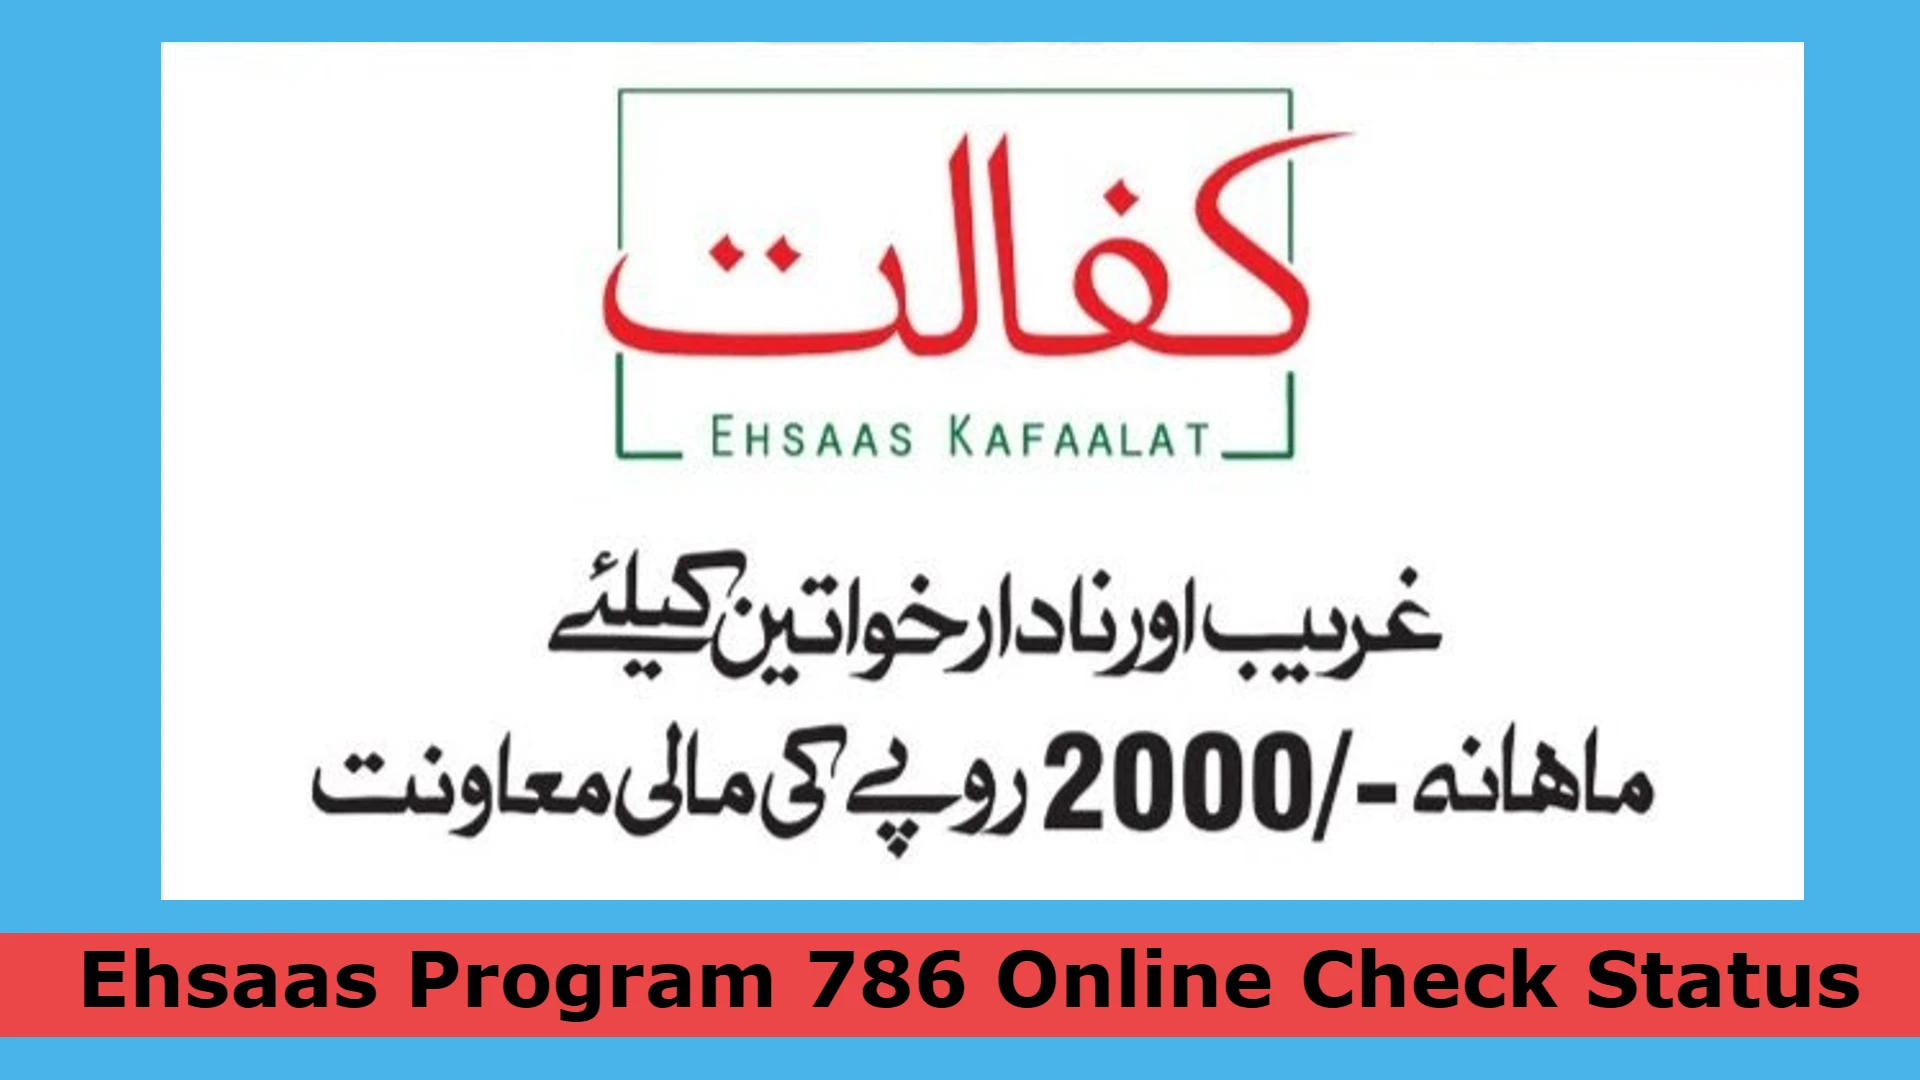 Ehsaas Program 786 Online Check Status